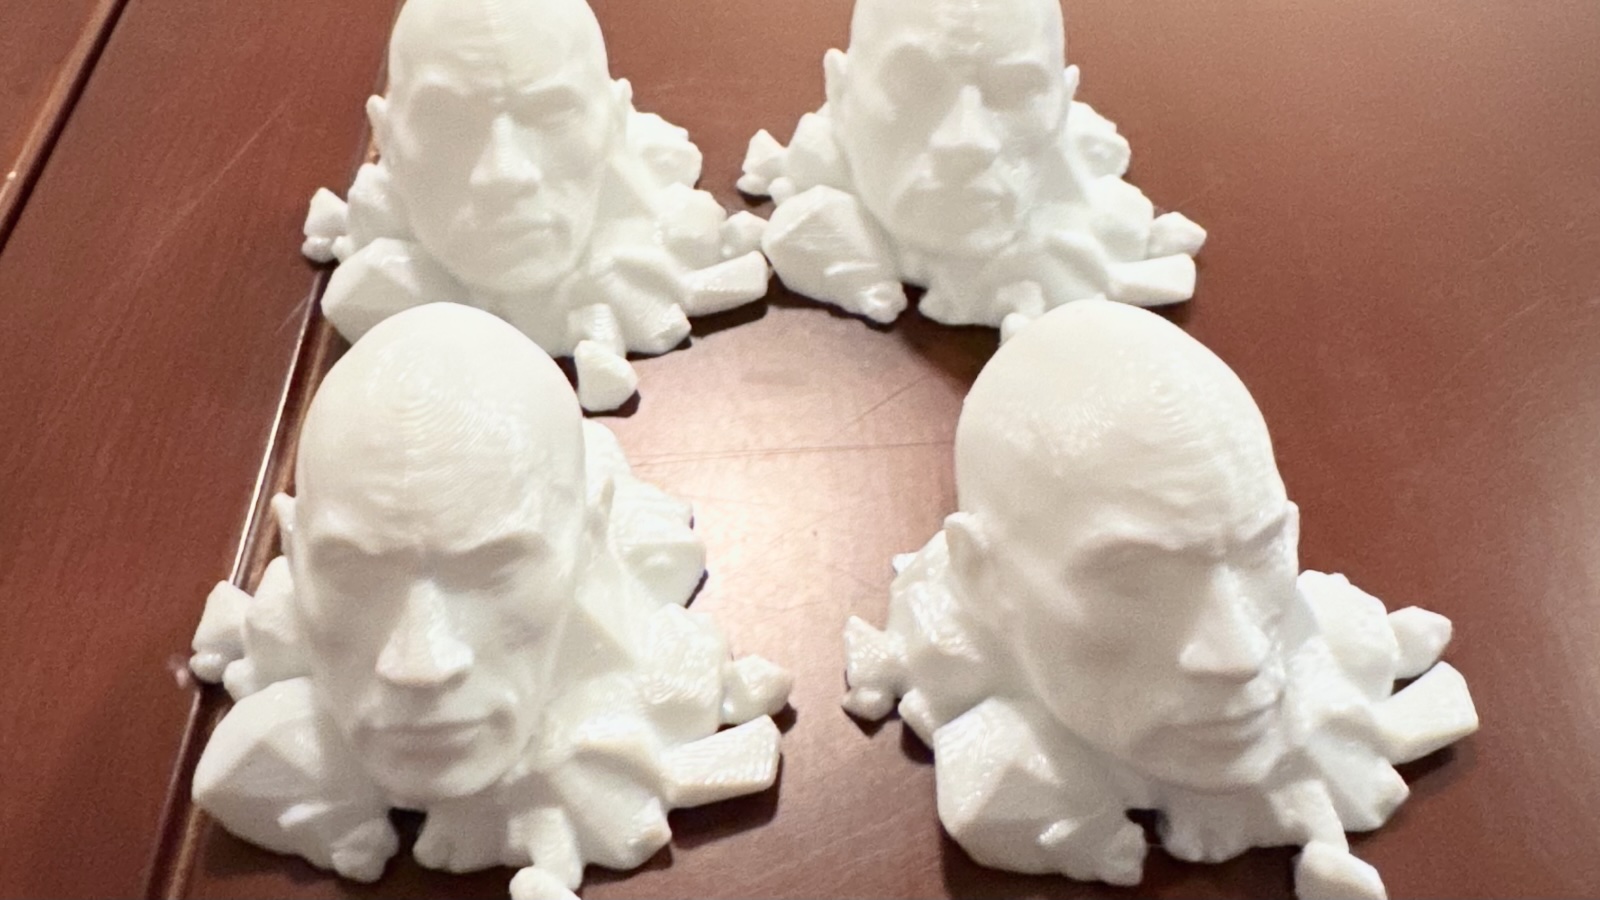 Multiple 3D printed Dwayne the Rock Johnsons